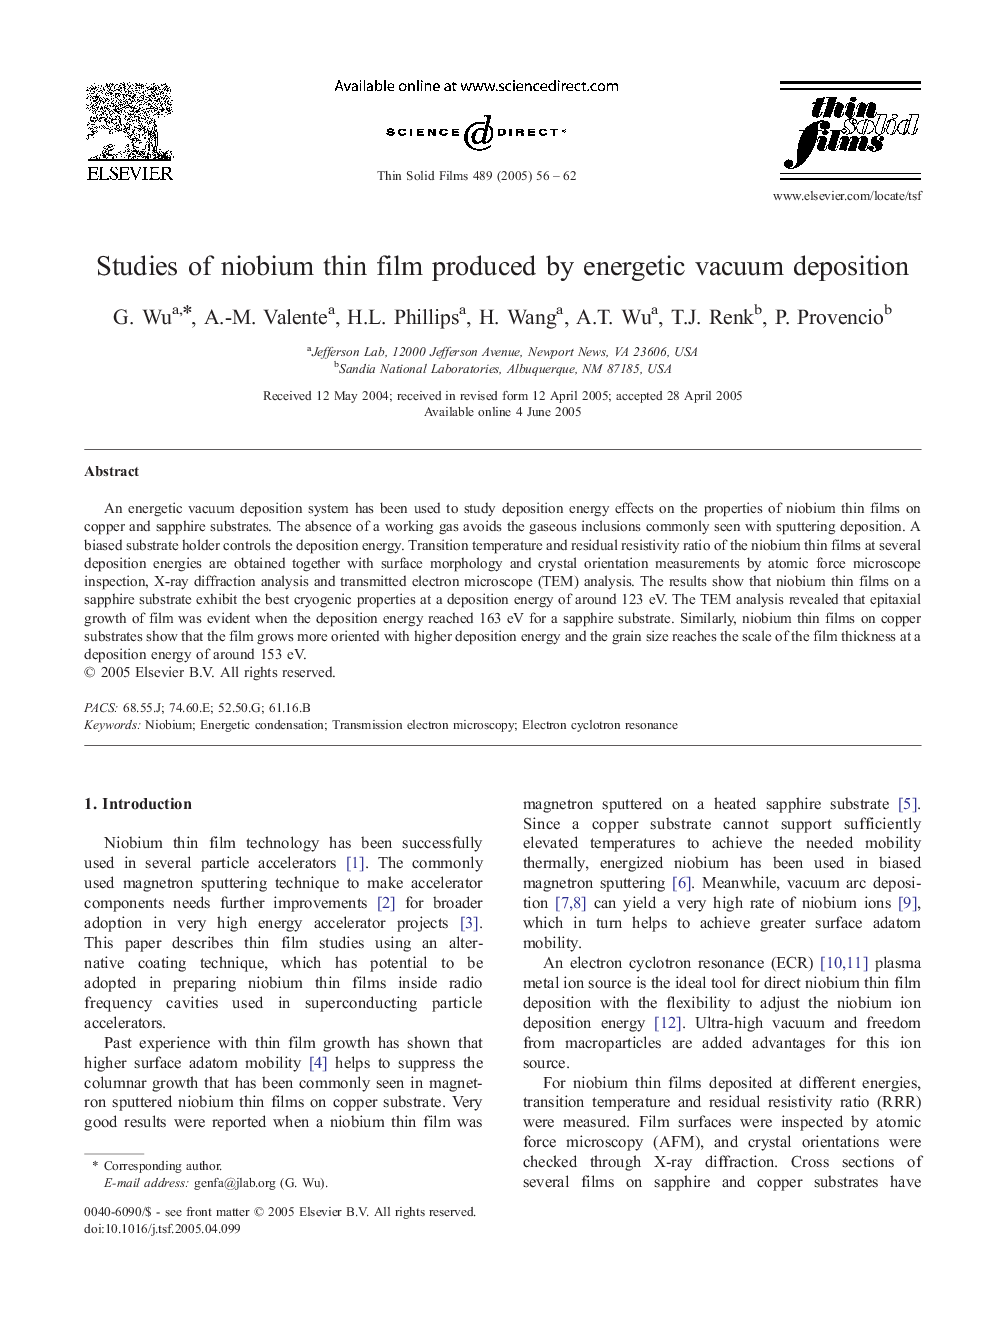 Studies of niobium thin film produced by energetic vacuum deposition